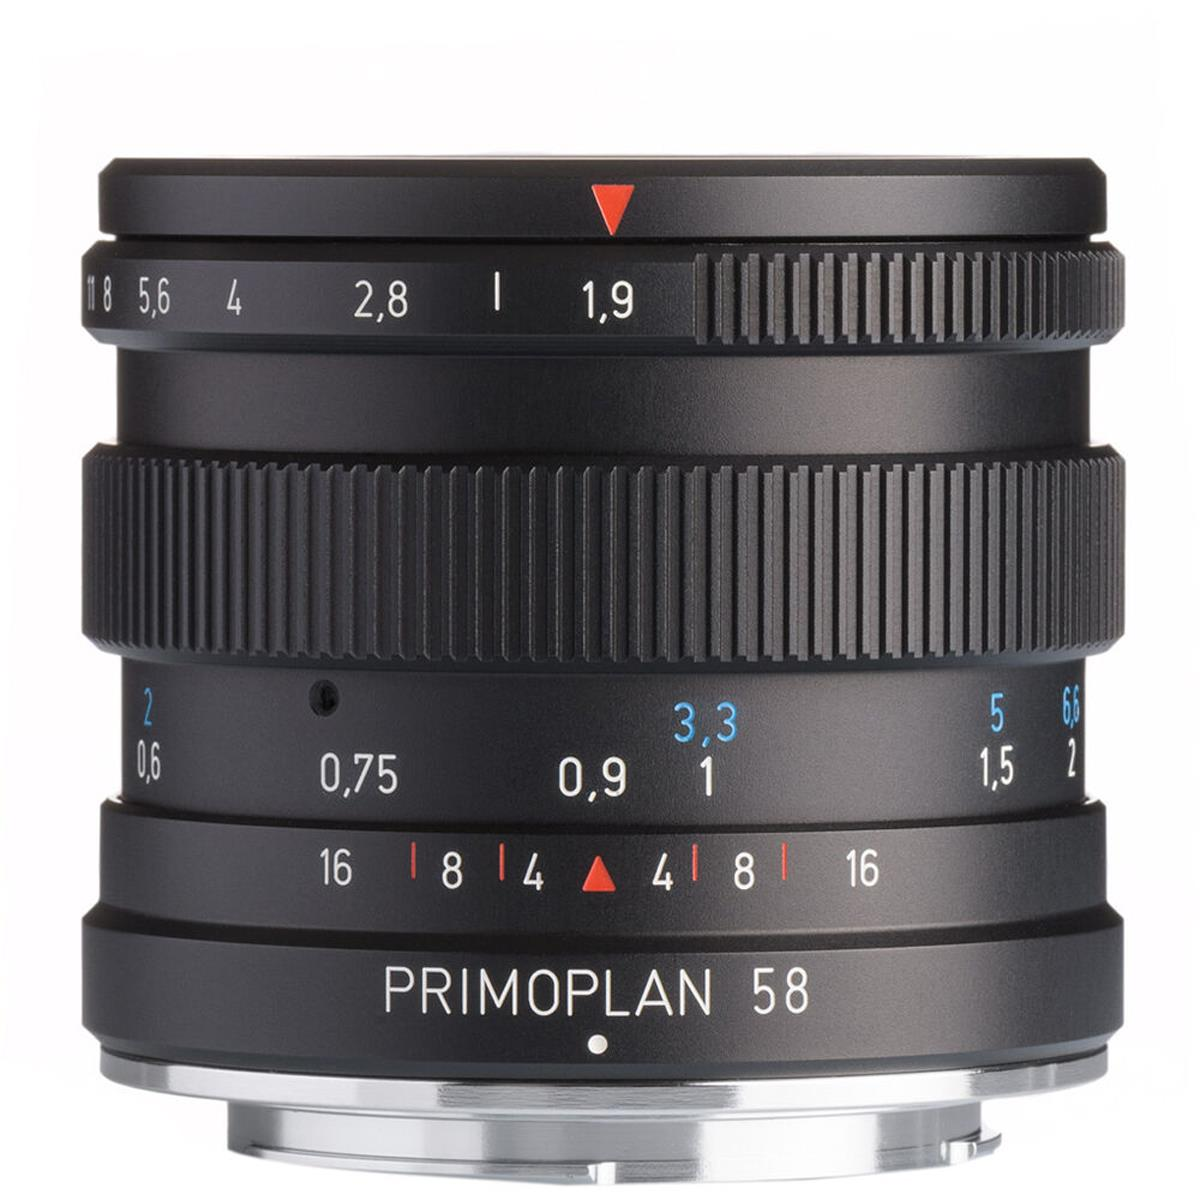 Meyer-Optik Gorlitz Primoplan 58 f1.9 II Lens for Nikon Z